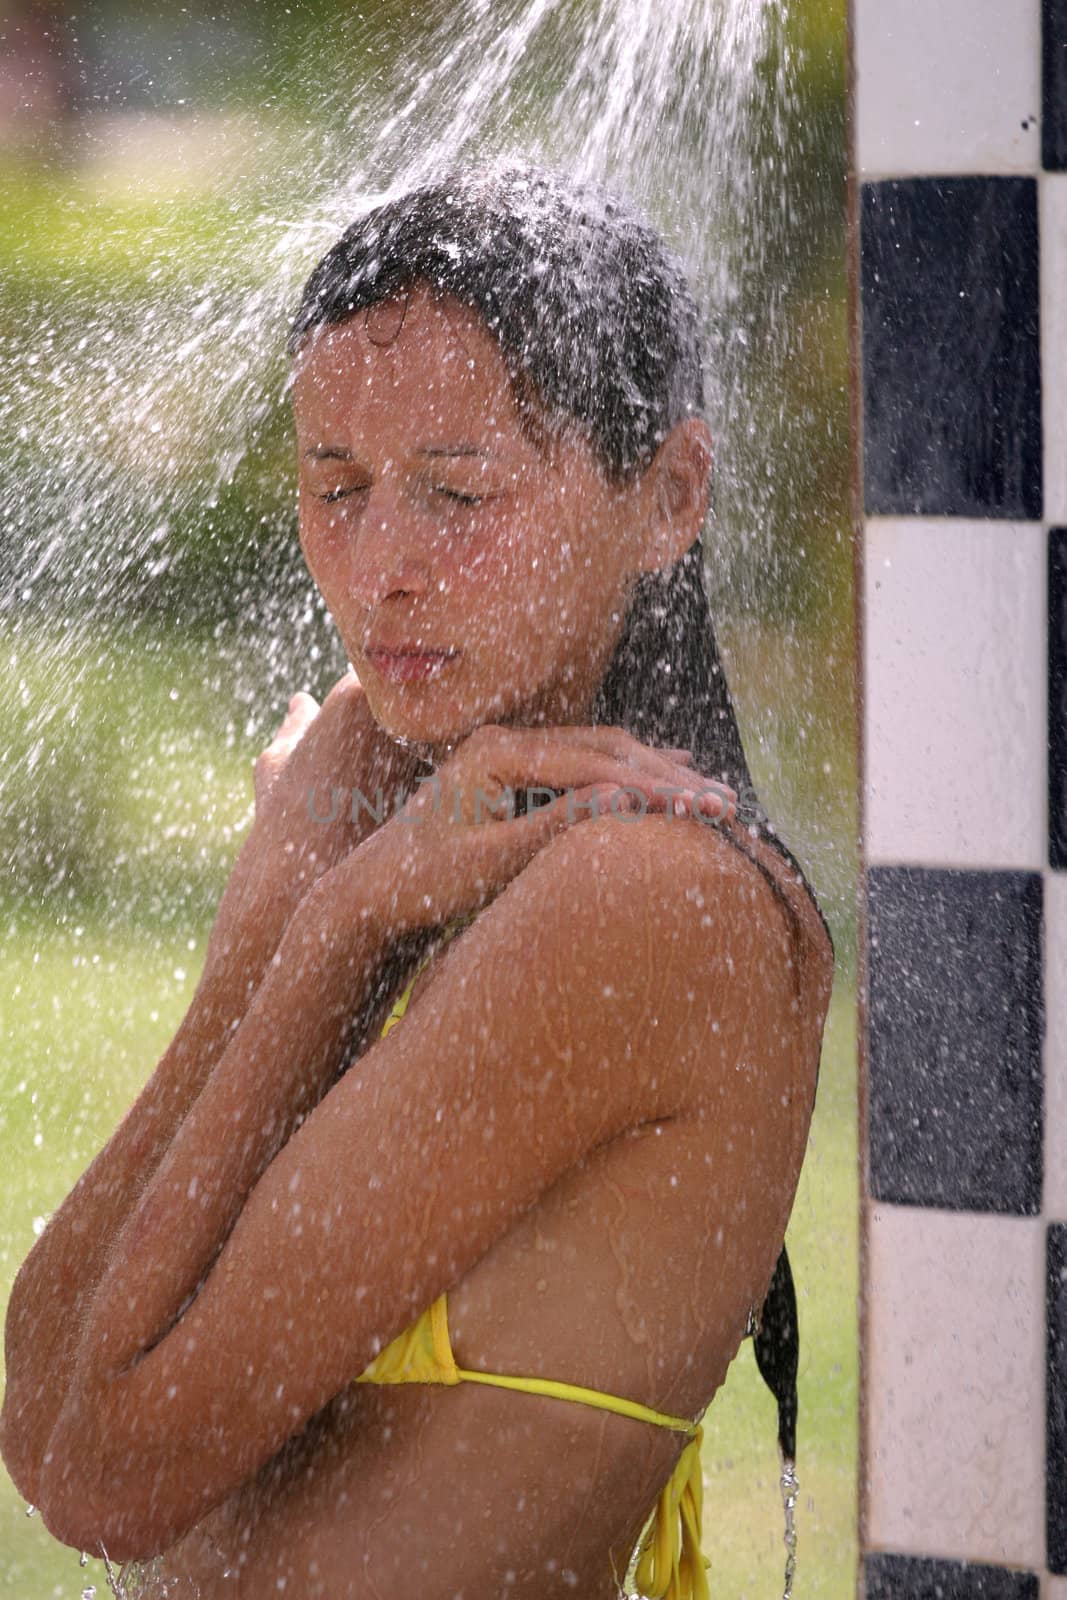 tanned woman in bikini takes shower on the beach